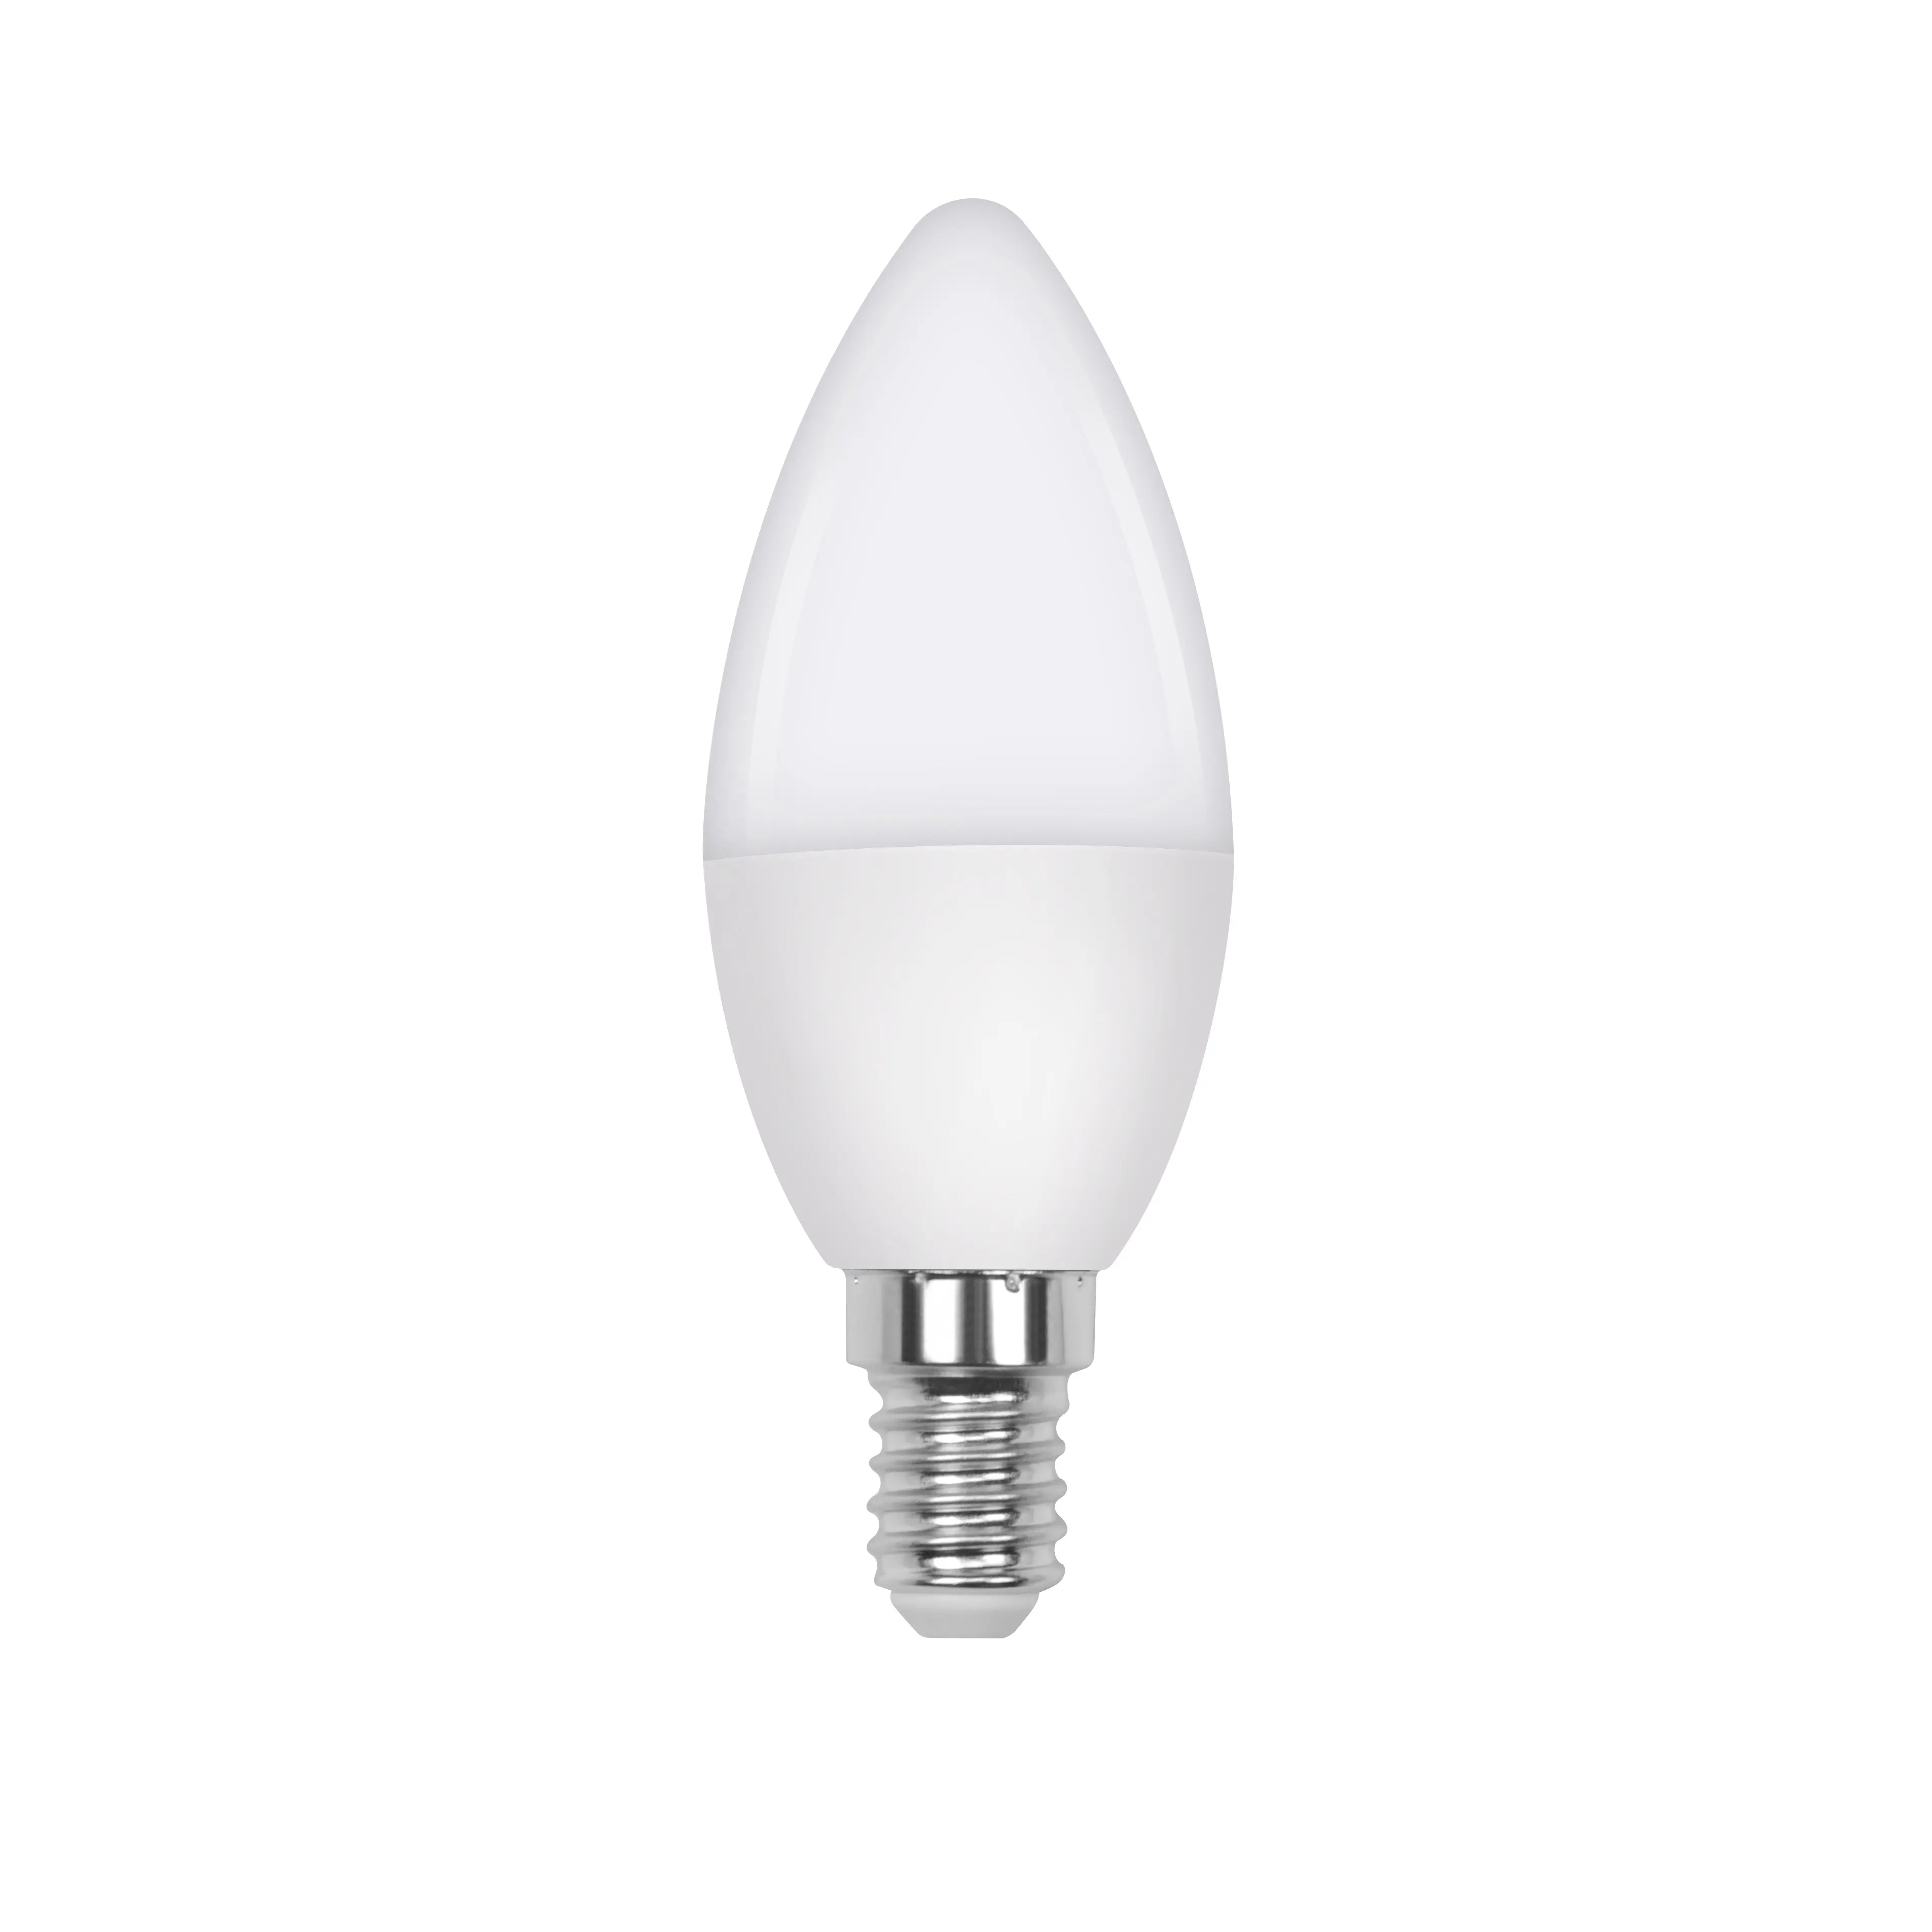 2022 new 3w save energy e14 led light lamp bulb price A bulb